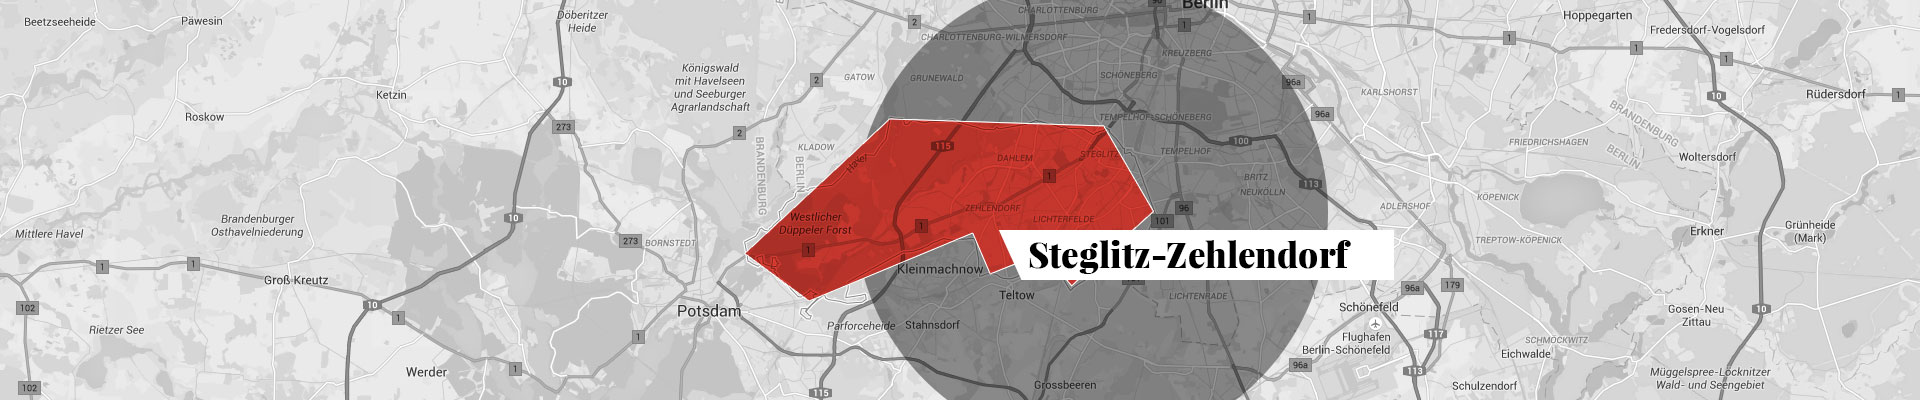 Steglitz-Zehlendorf map